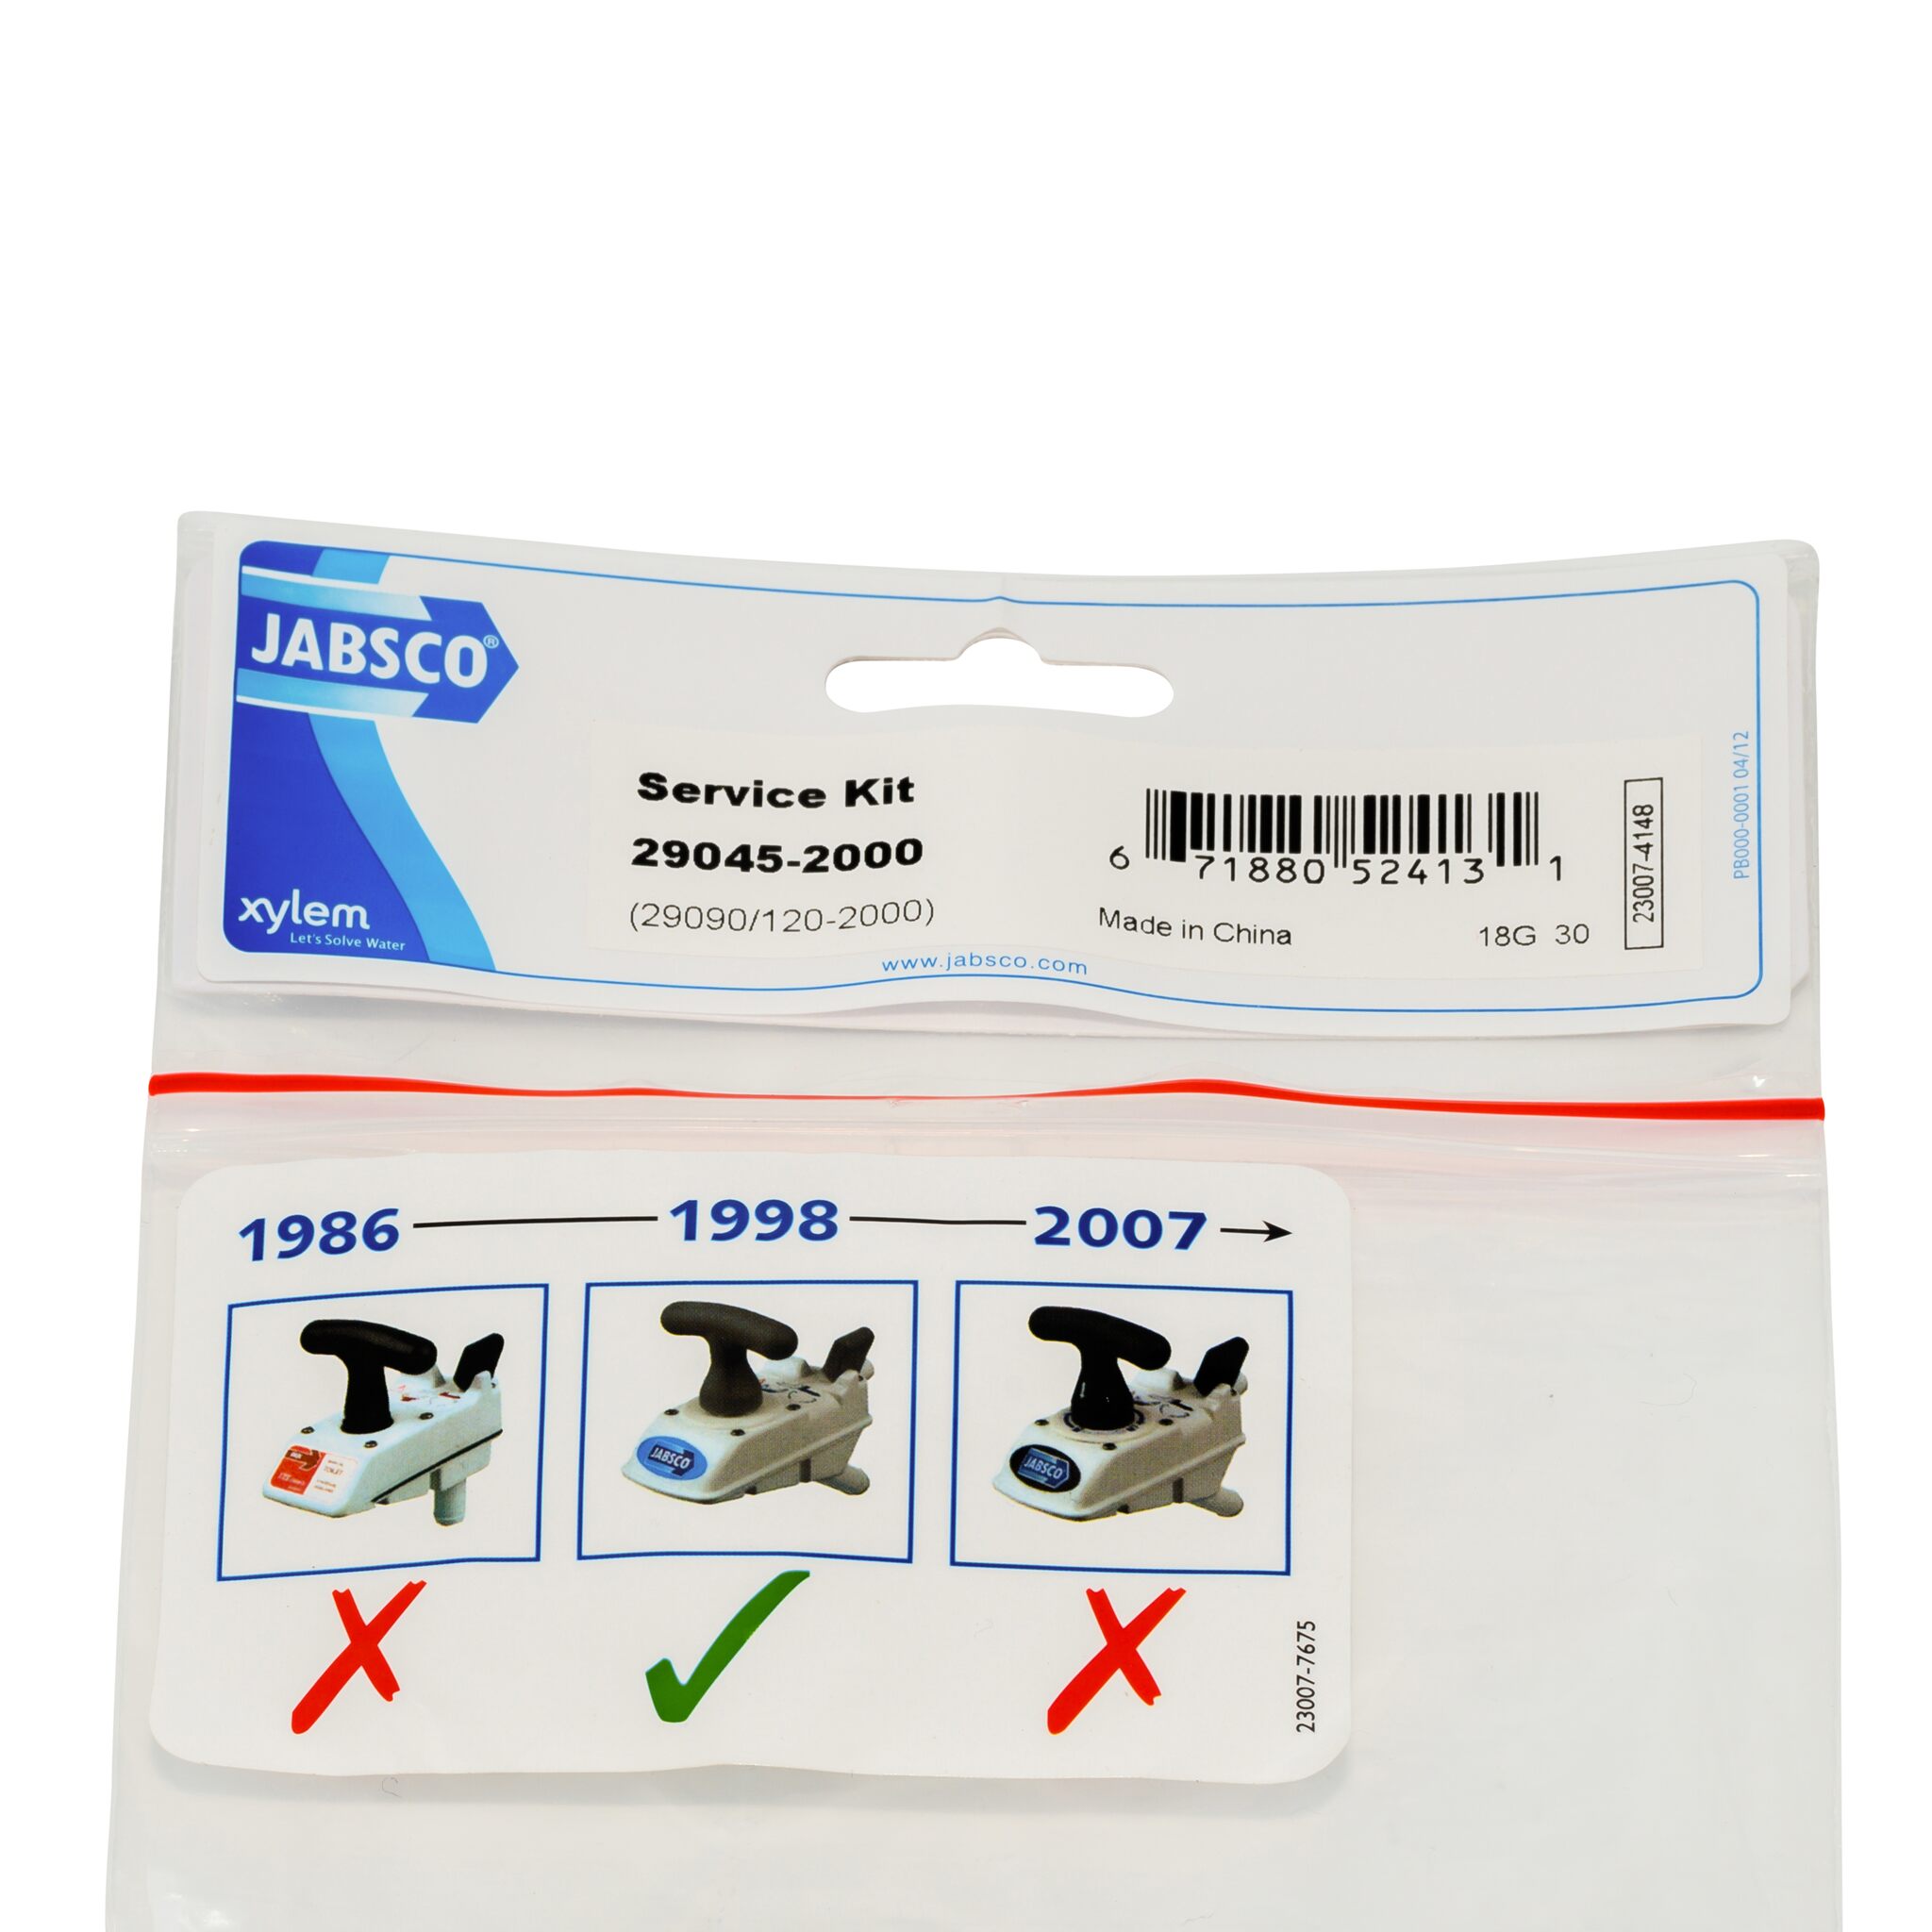 JABSCO service kit for on-board toilets